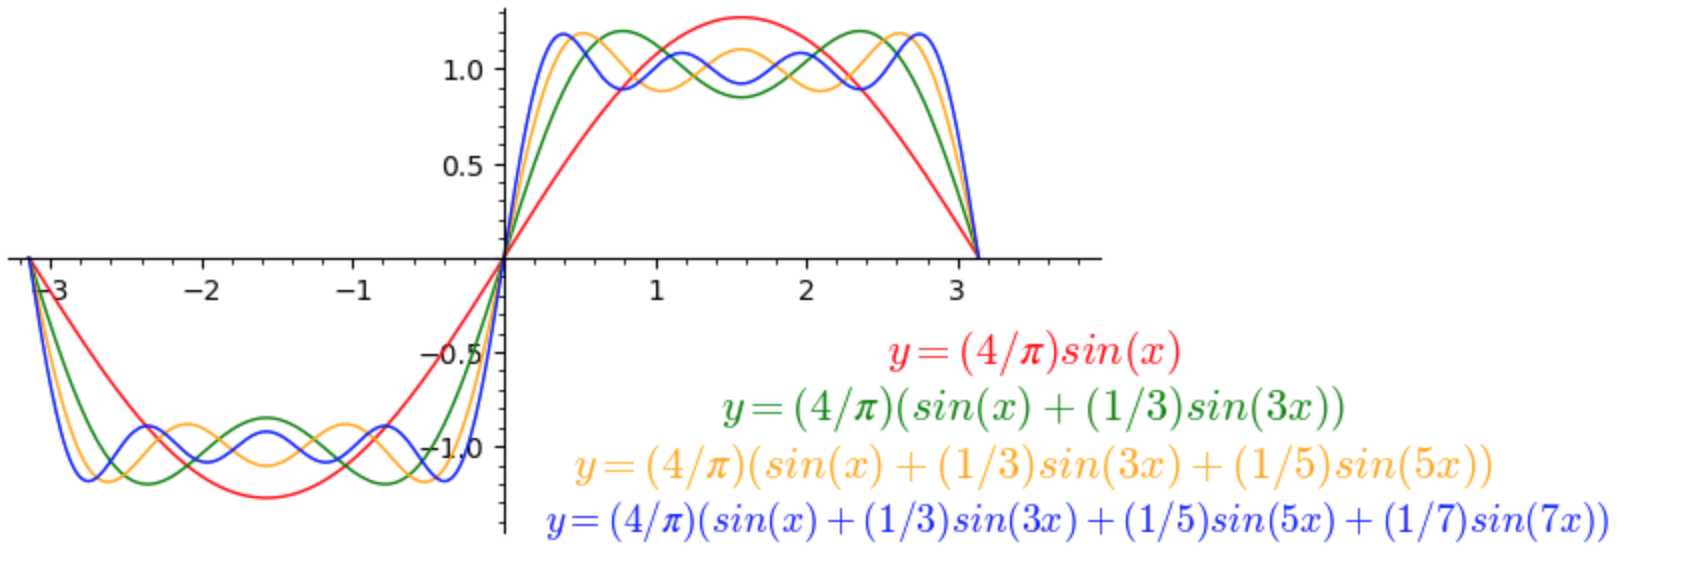 Approssimazione tramite serie di Fourier